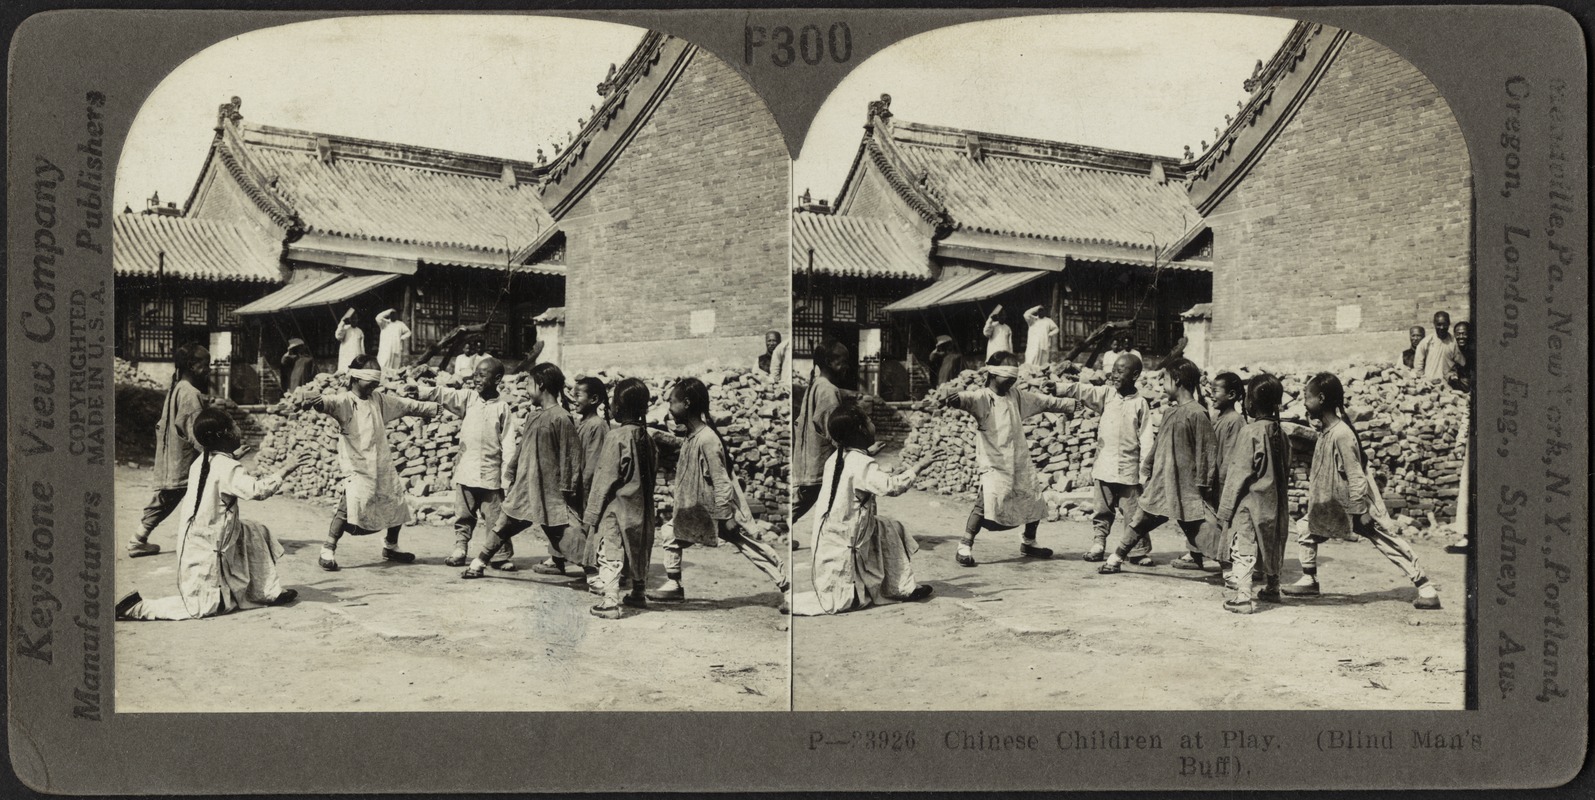 Chinese children at play (blindman's buff)